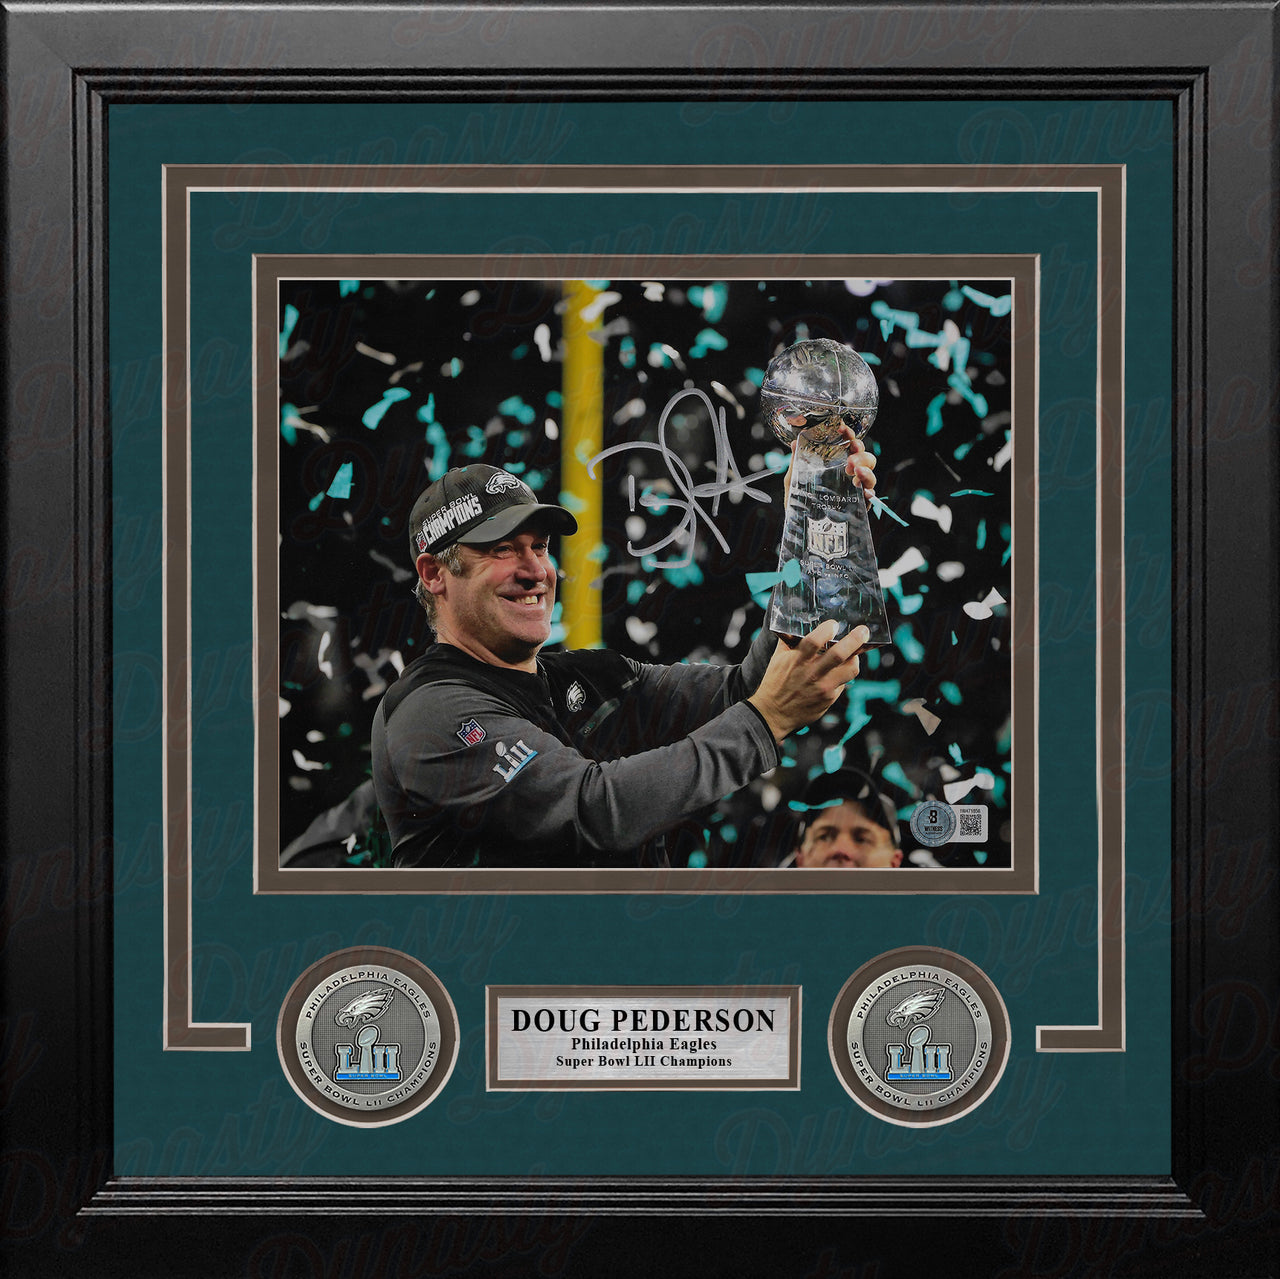 Doug Pederson Super Bowl Lombardi Trophy Philadelphia Eagles Autographed 8x10 Framed Football Photo